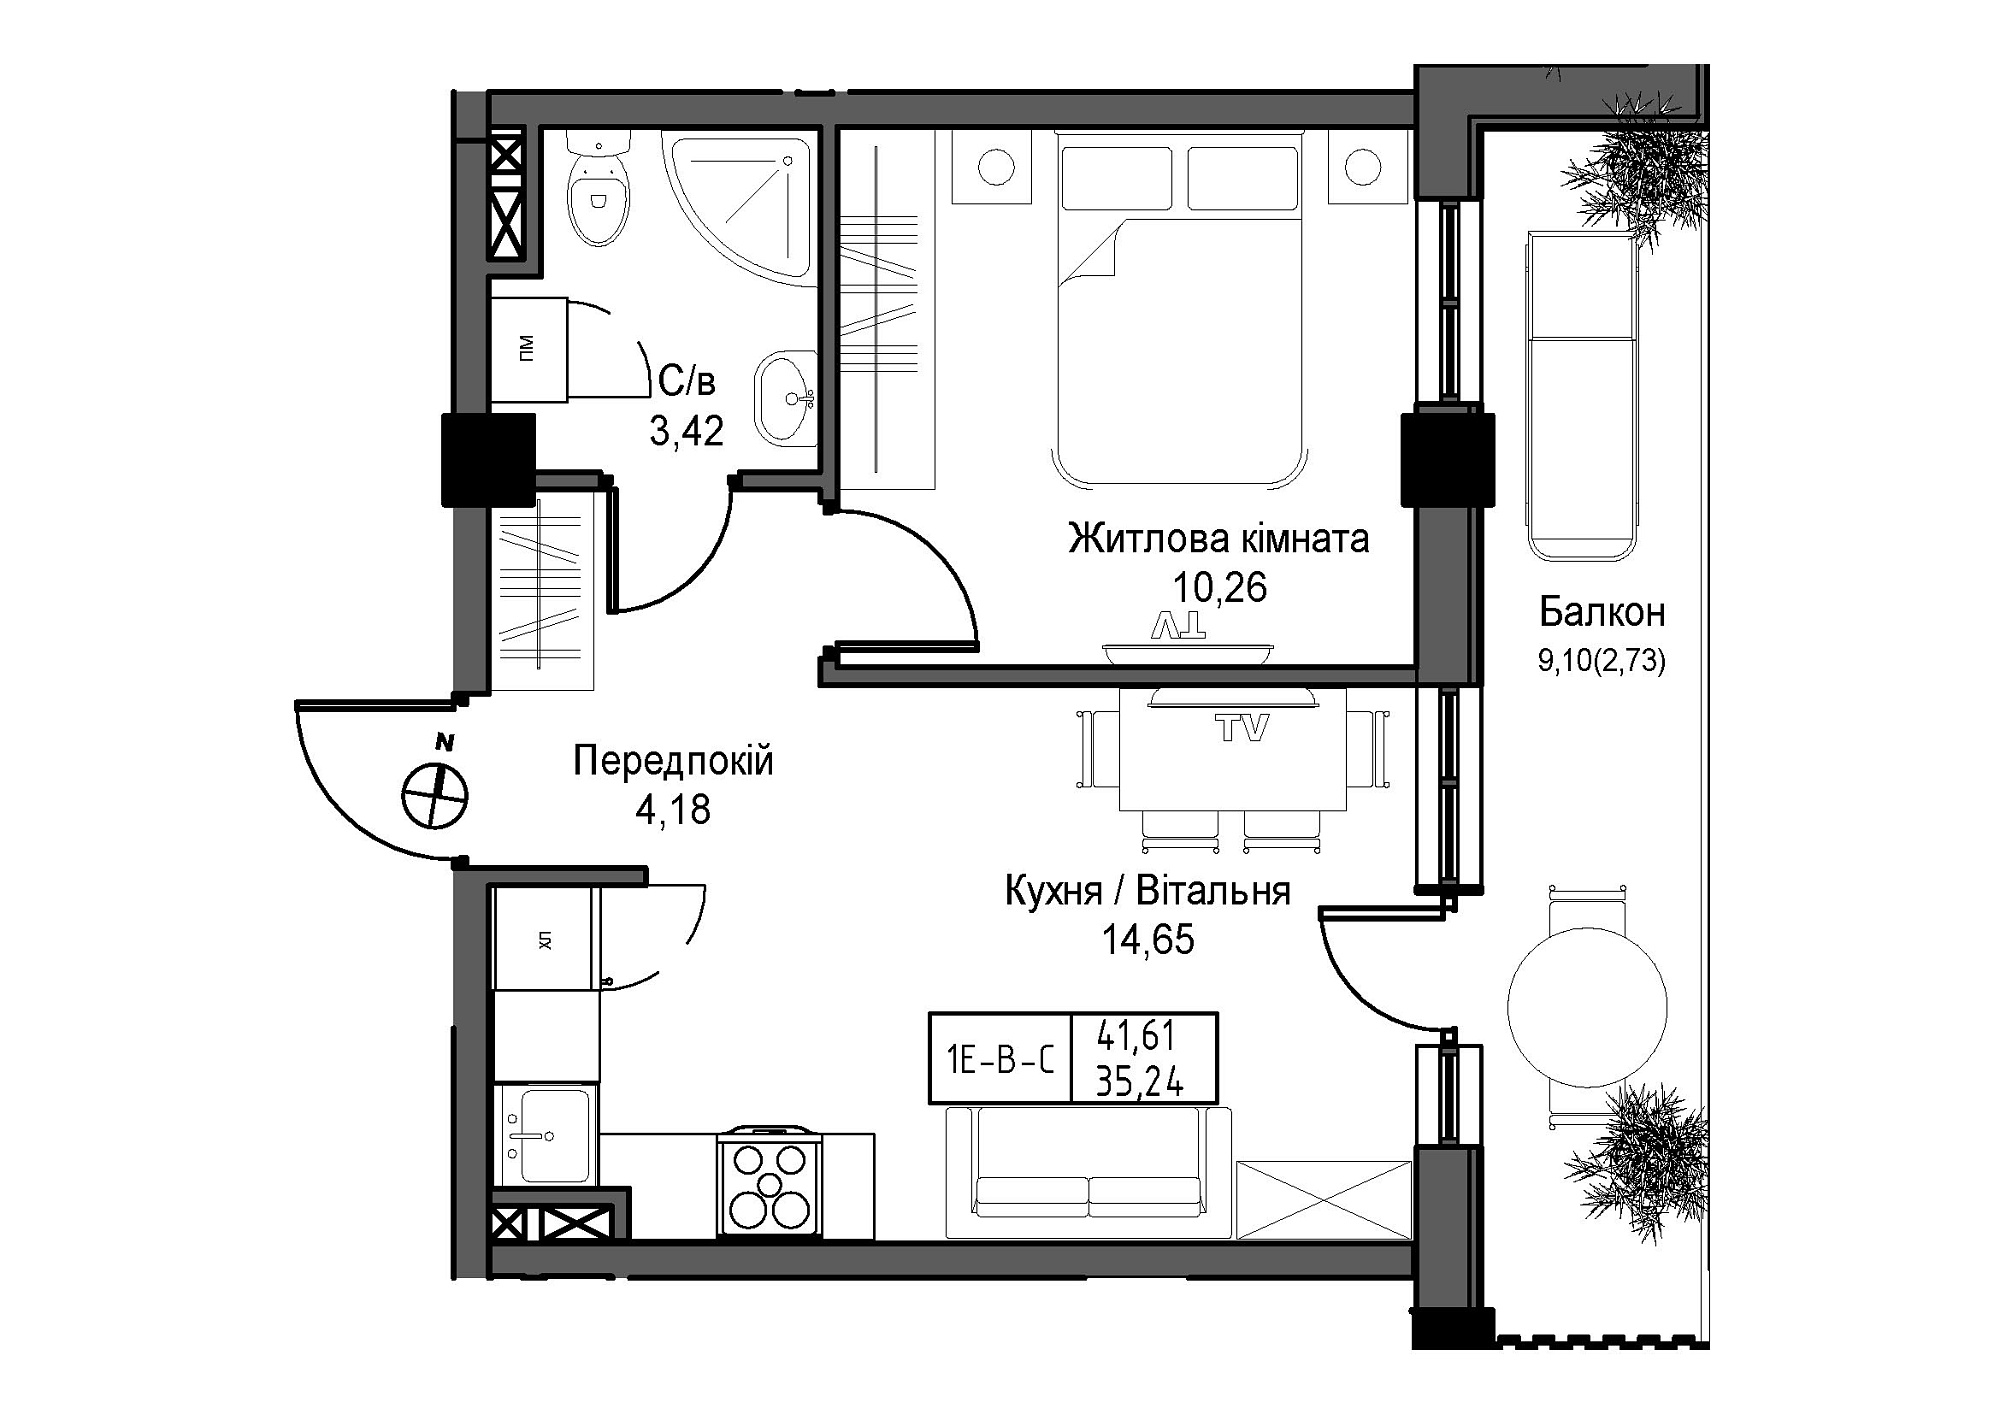 Планування 1-к квартира площею 35.24м2, UM-007-06/0004.